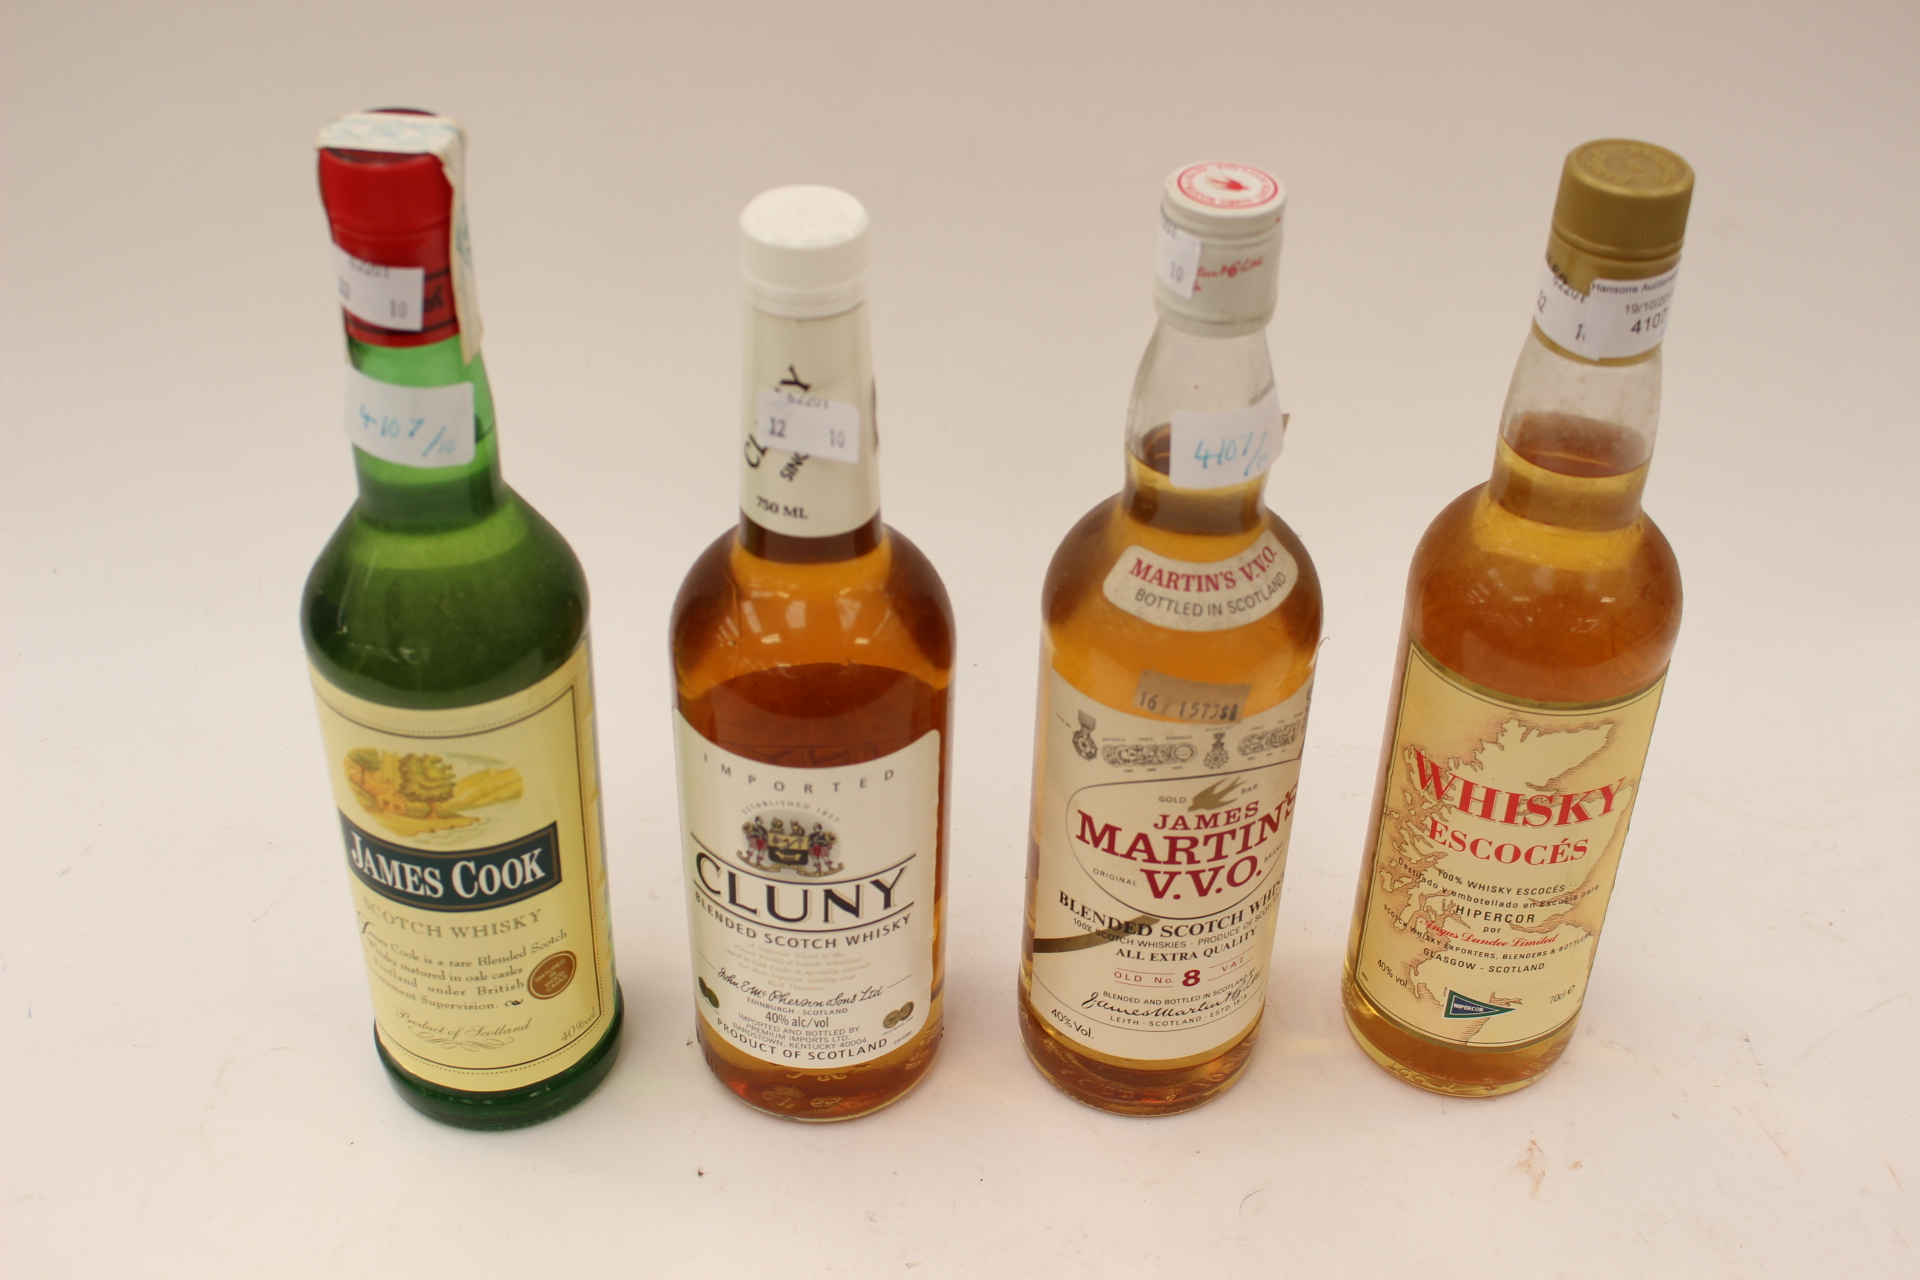 Whisky including Balie Nicol Jarvie, Glen Silver 6 year old, Banoch Brae, James Martin VV0,